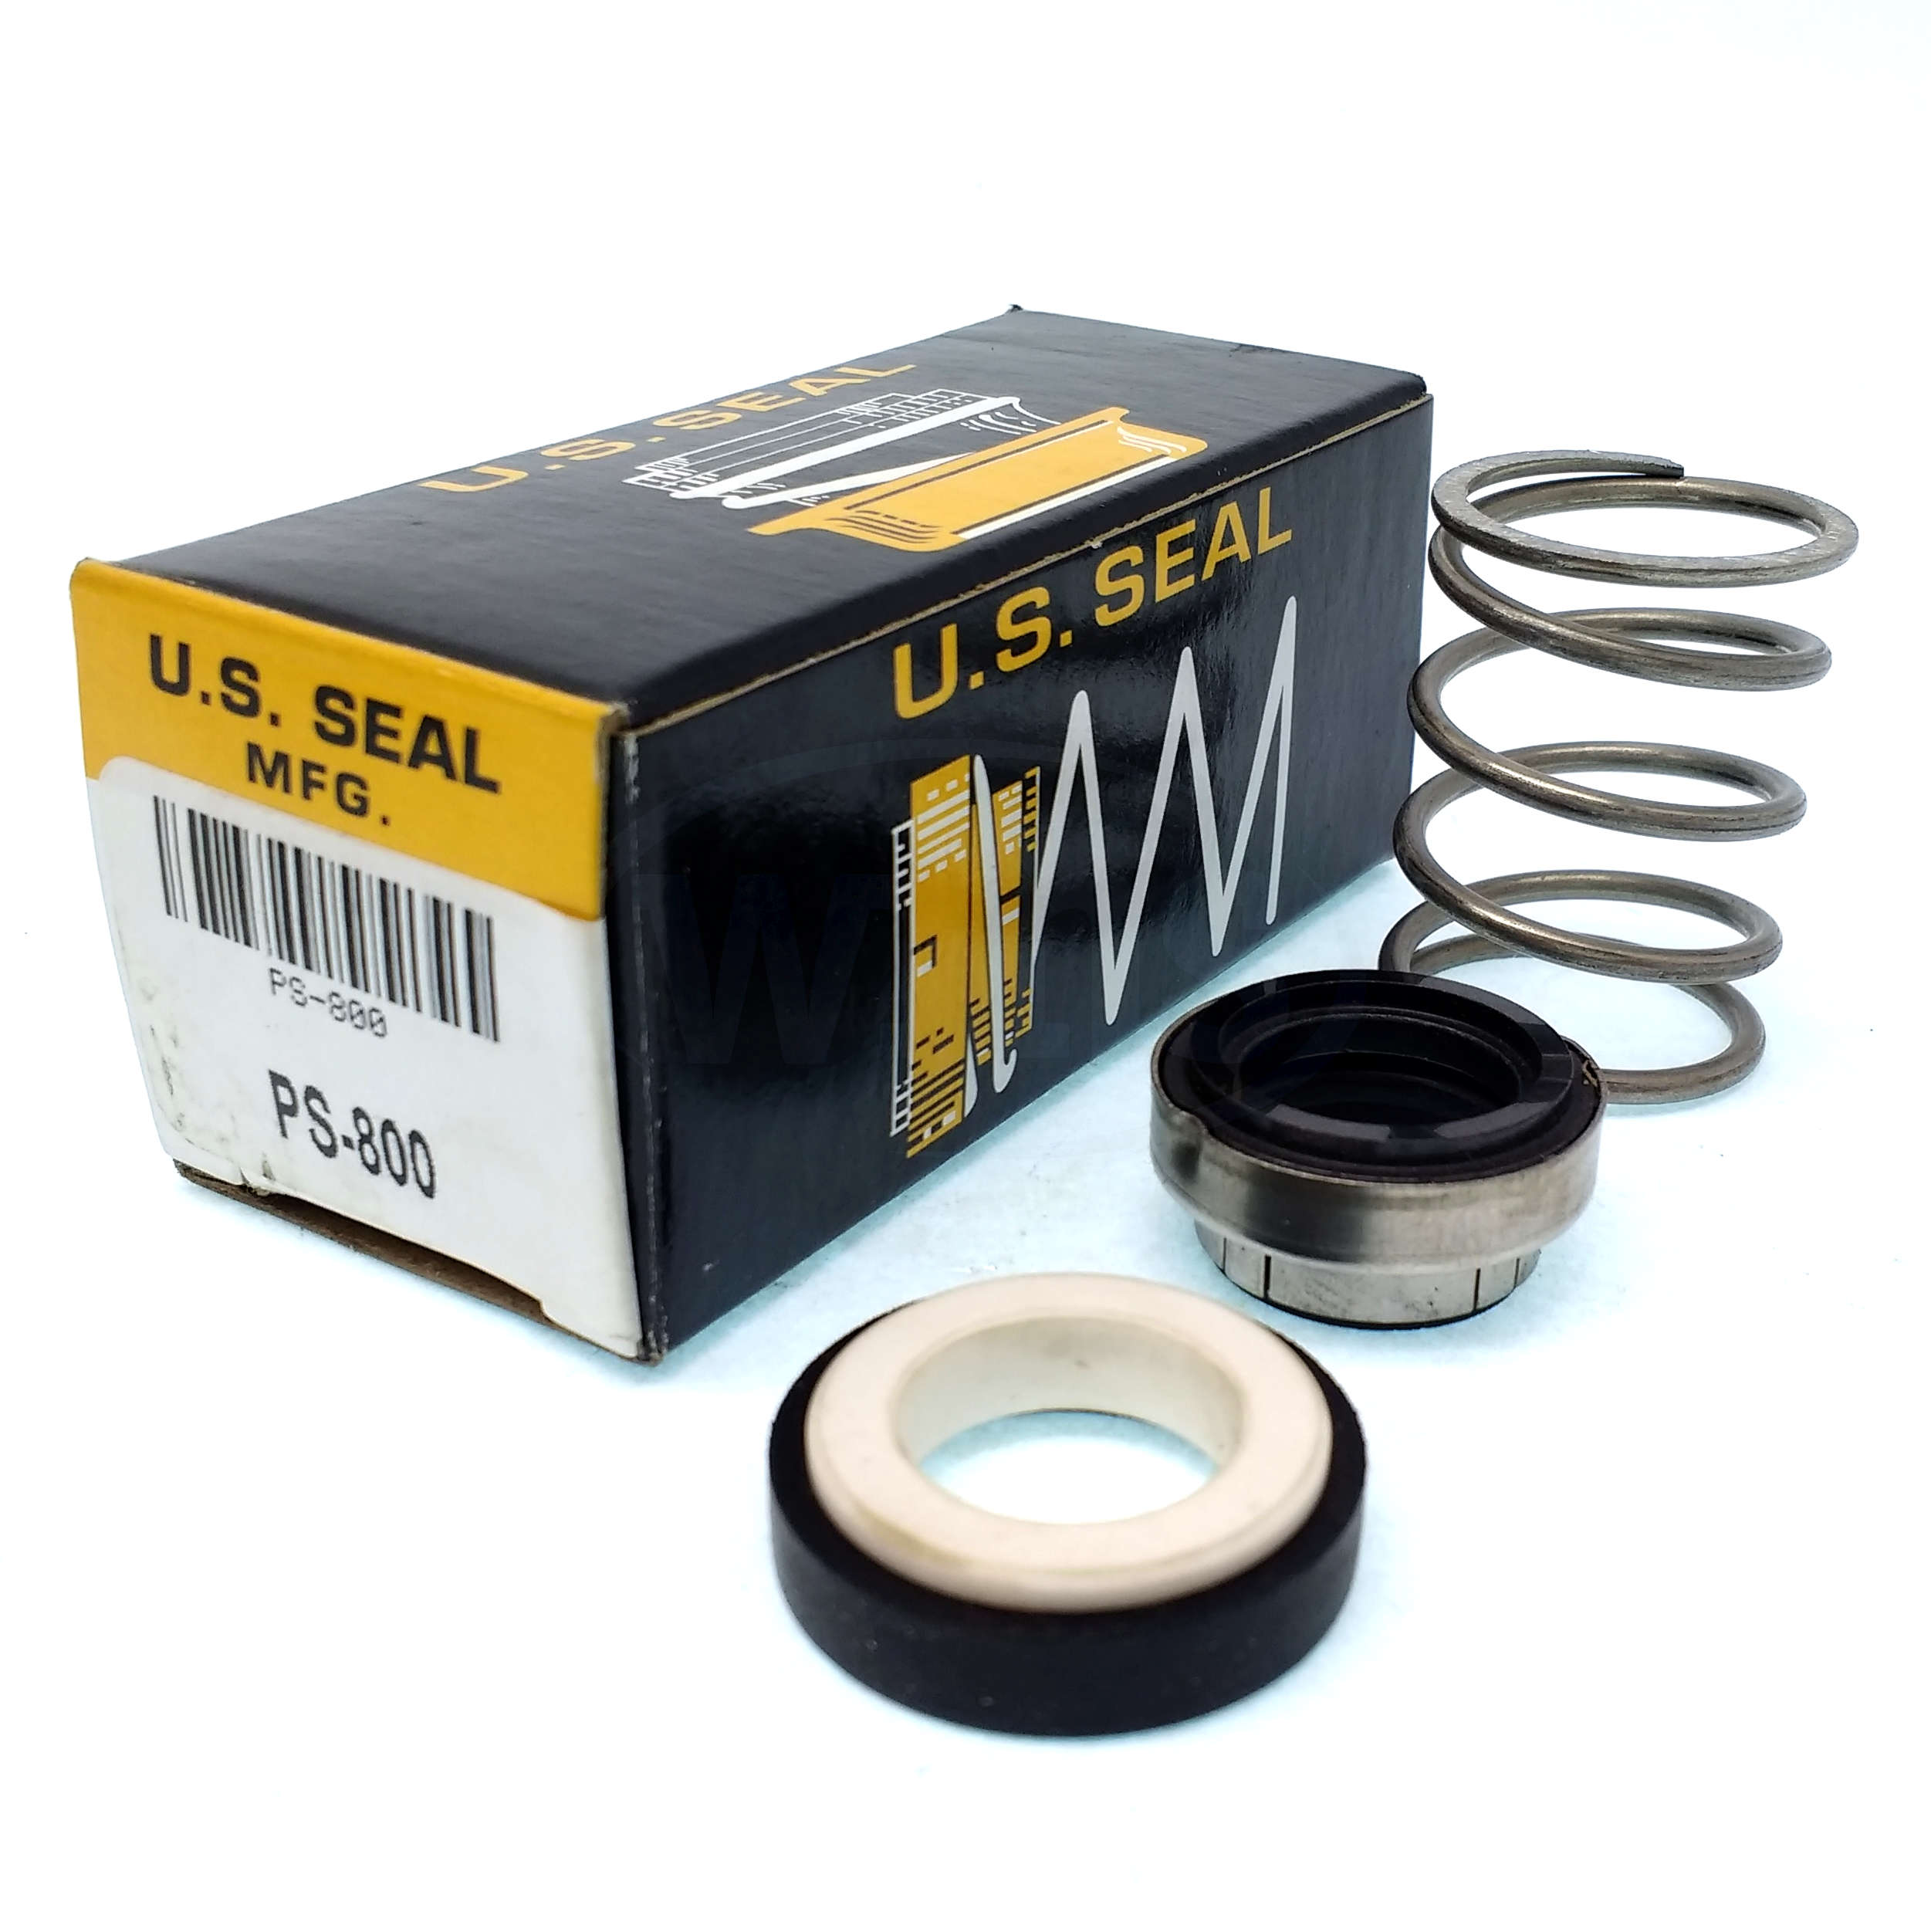 PS-800 U.S. Seal Mfg 5/8' Pump Seal 1